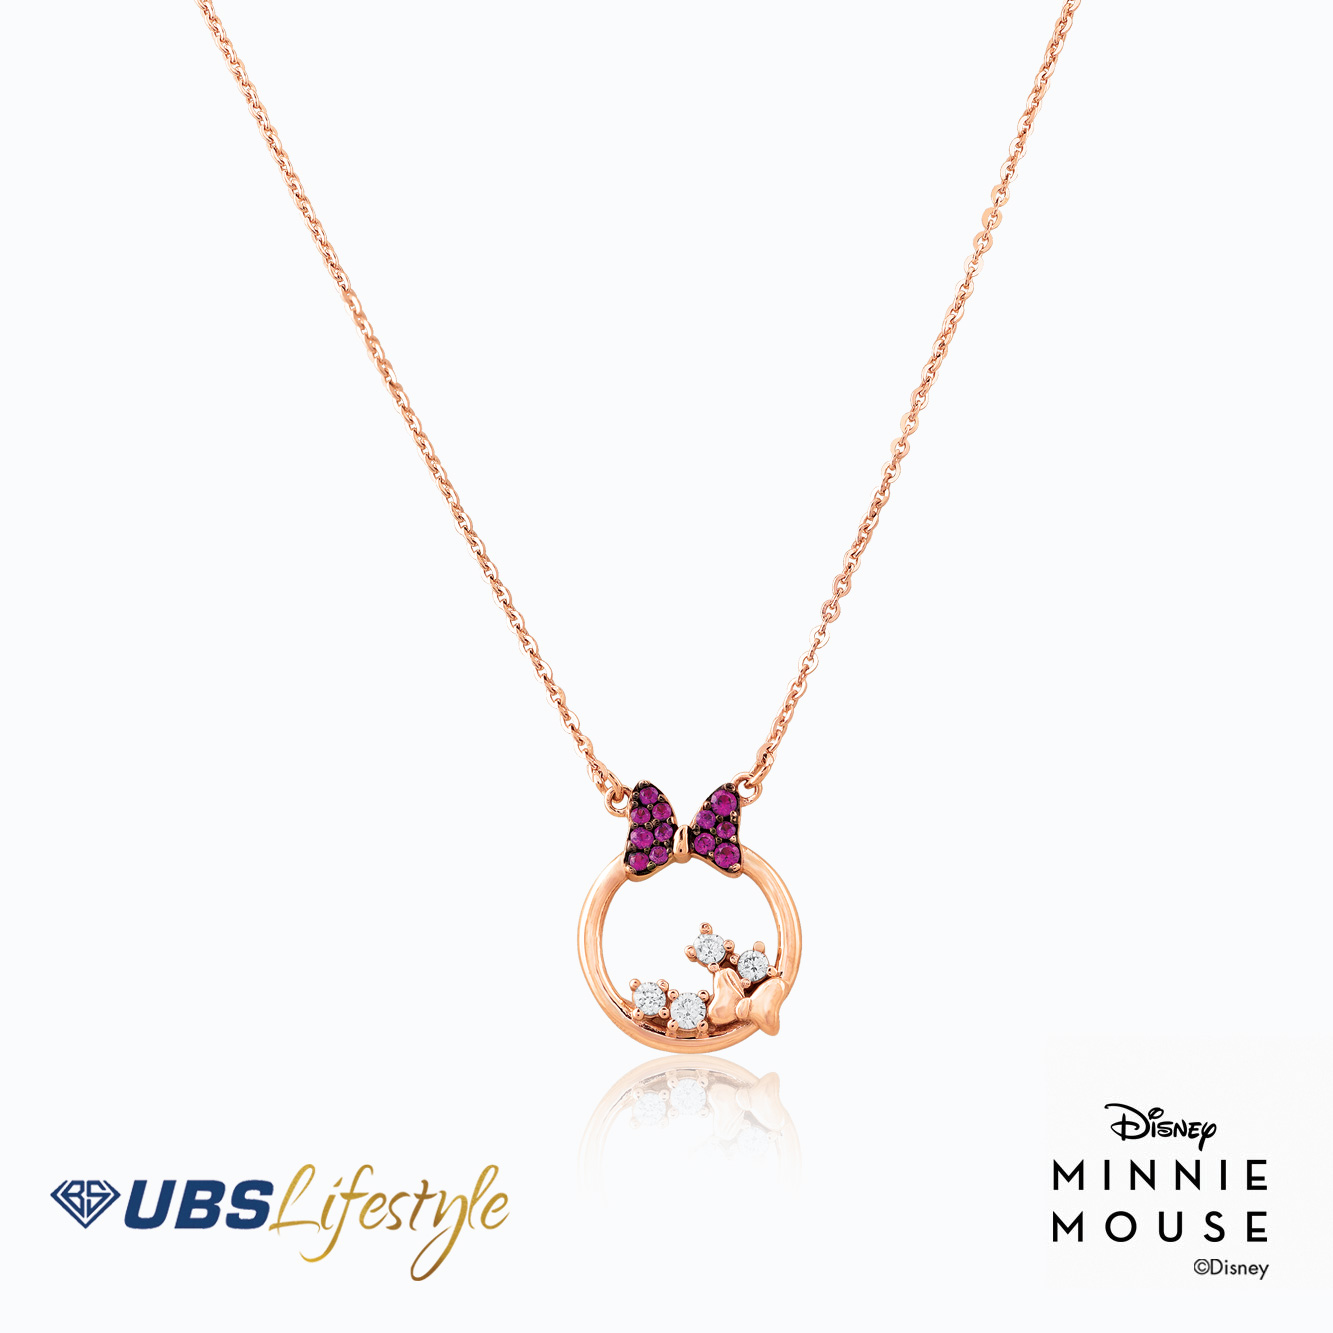 UBS Kalung Emas Disney Minnie Mouse - Kky0349R - 17K